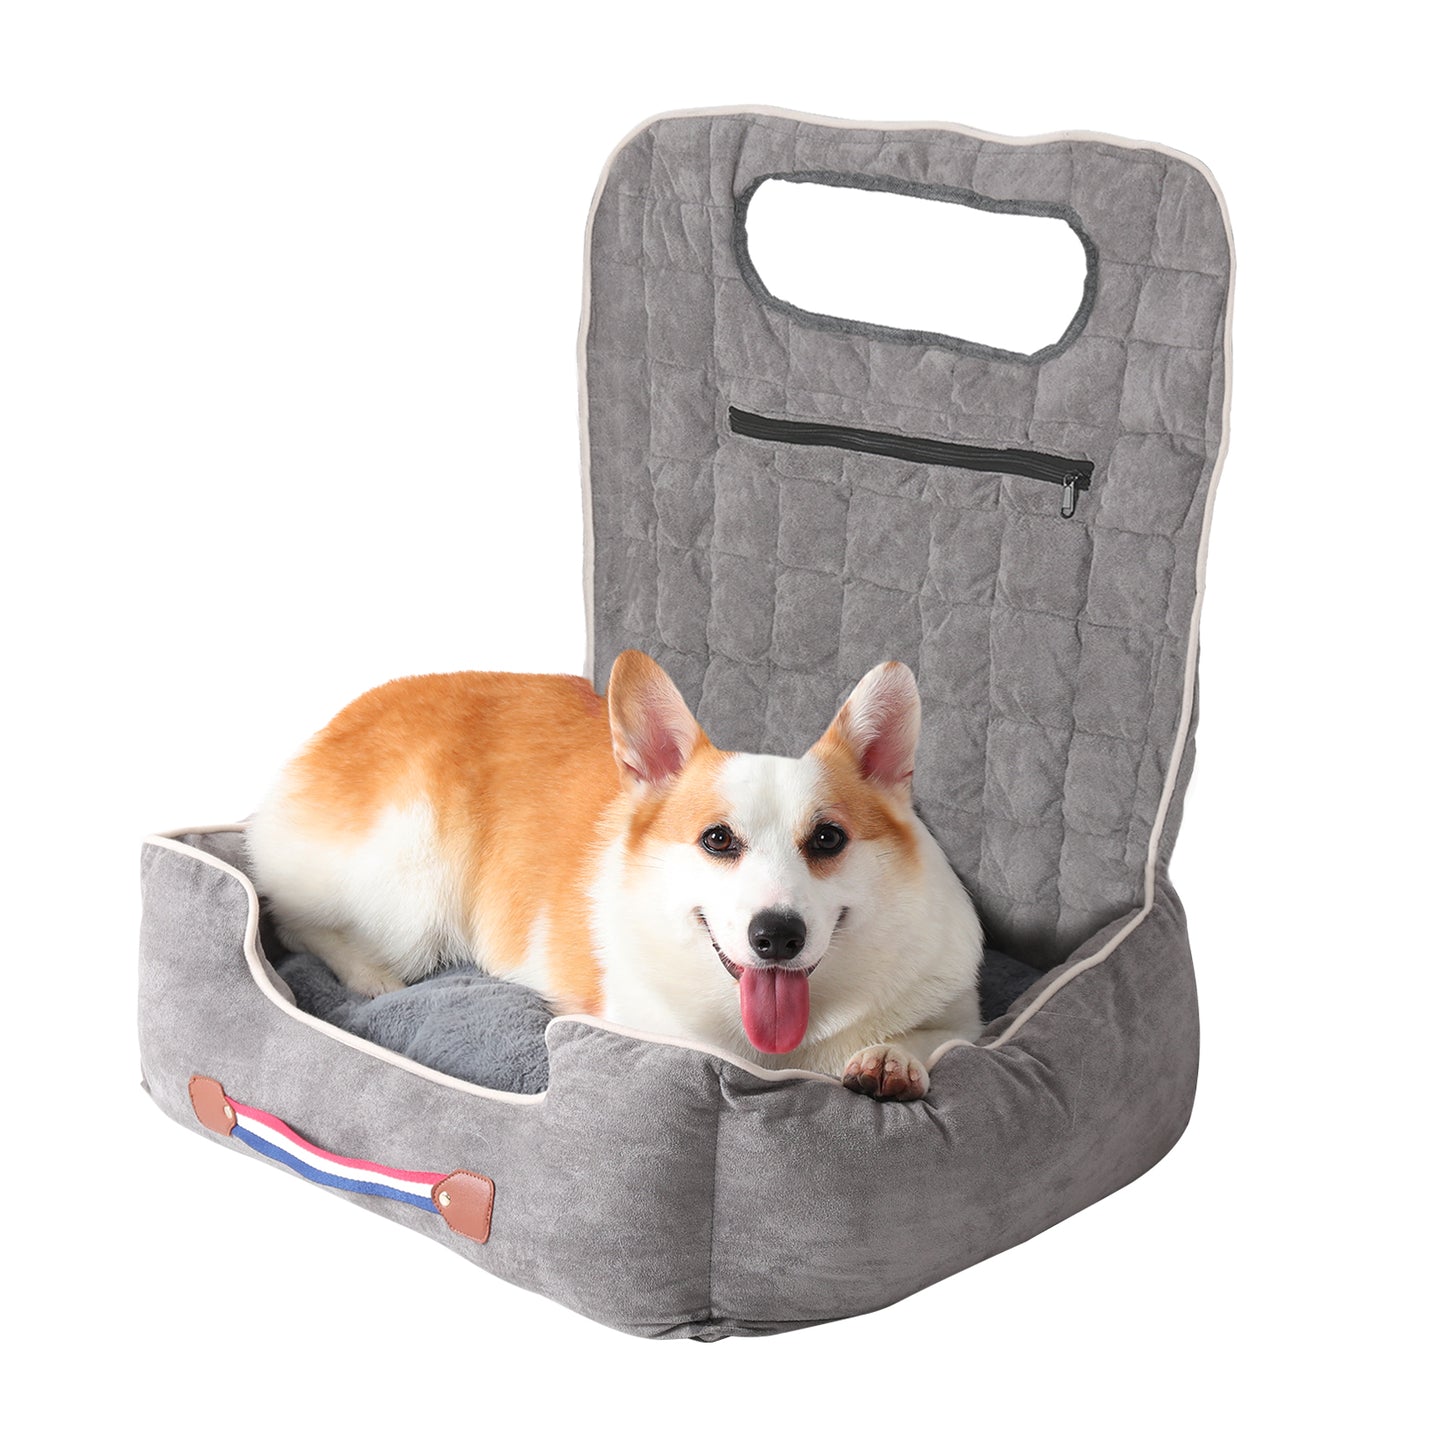 Soft Dog Car Seat Safe Anti-Slip Travel Portable Dog Booster with Pockets